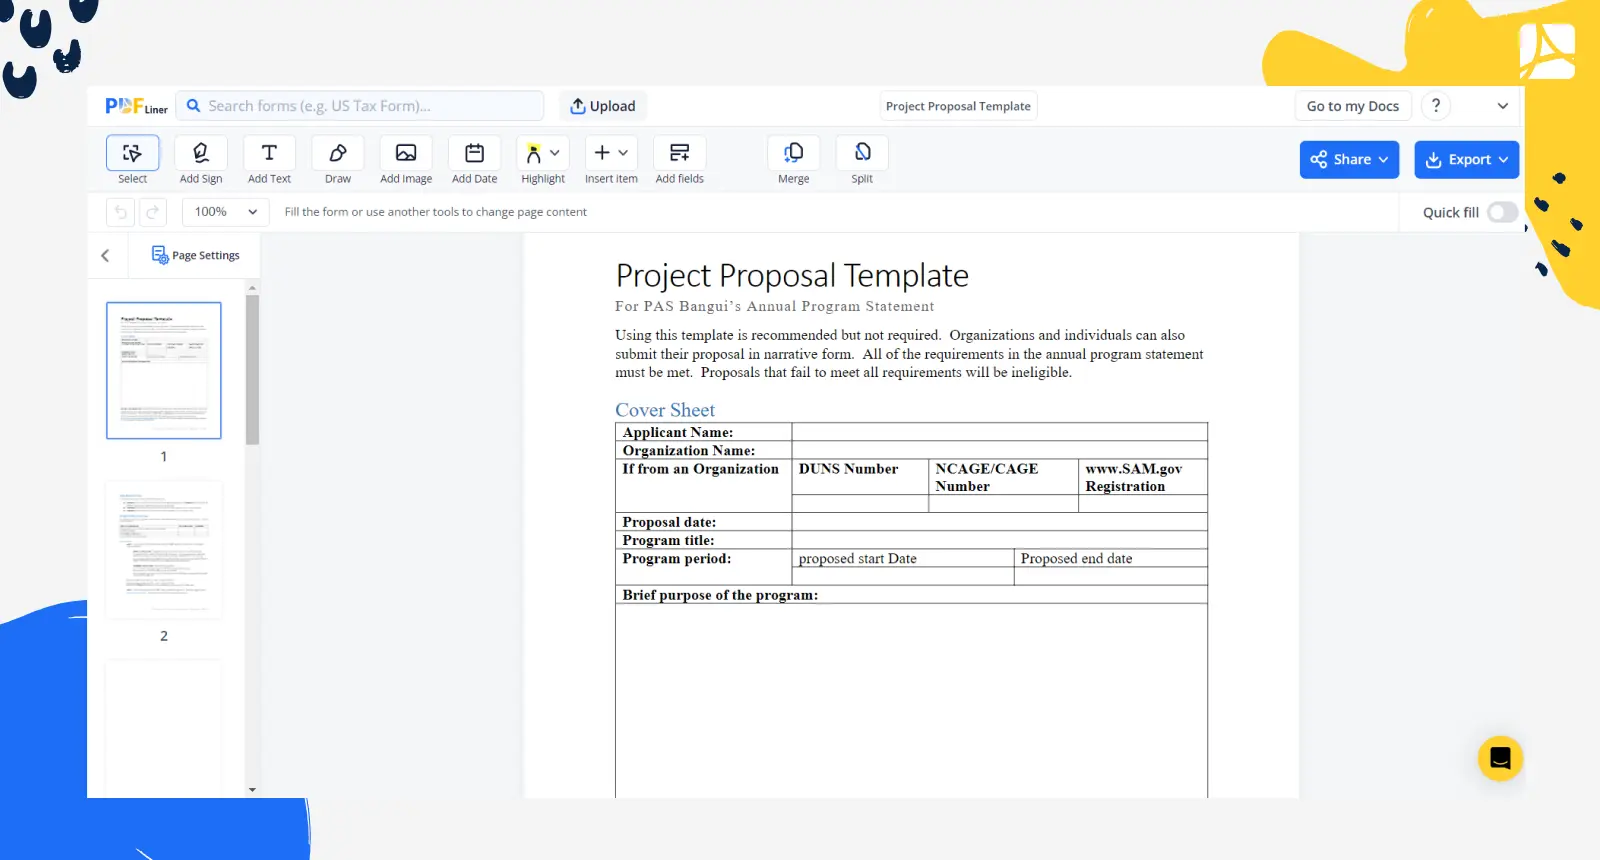 Project Proposal Template Form Screenshot